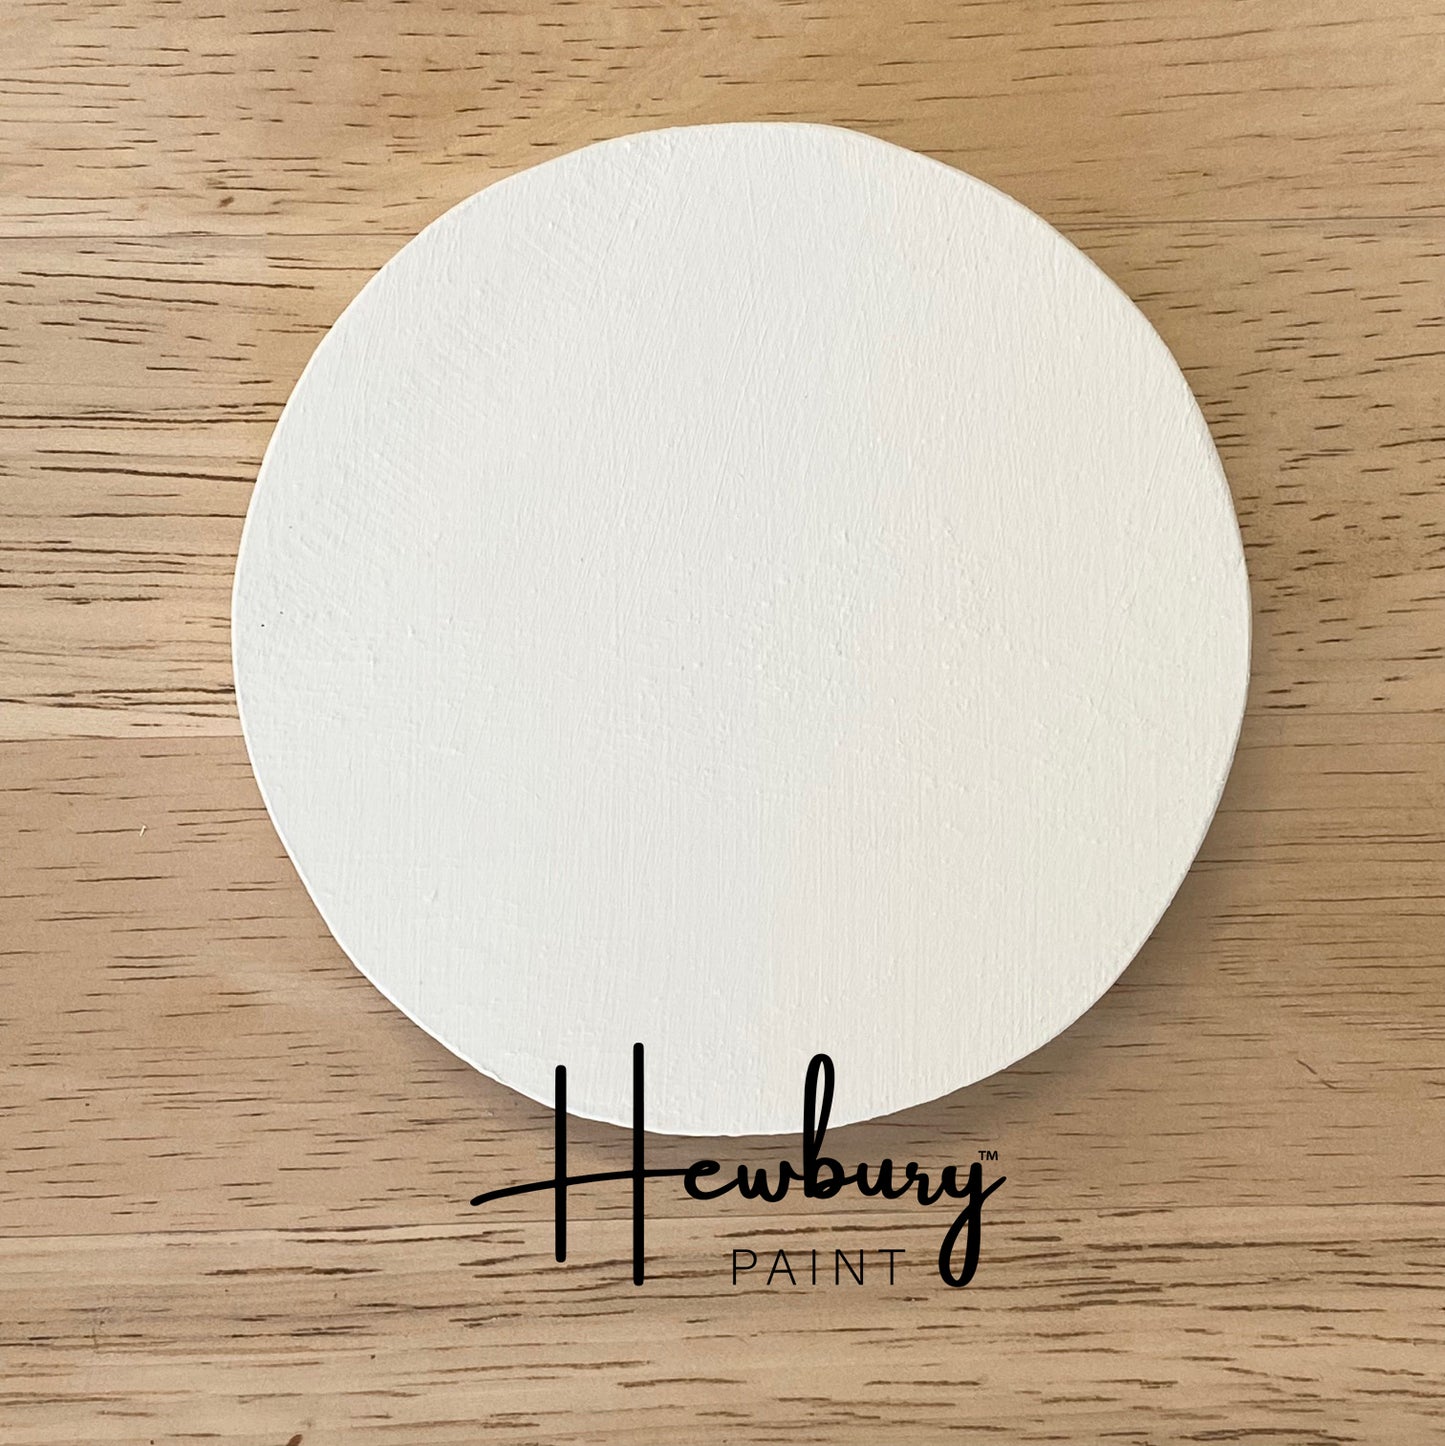 Hewbury Paint Hi-cover Range Baby's breath